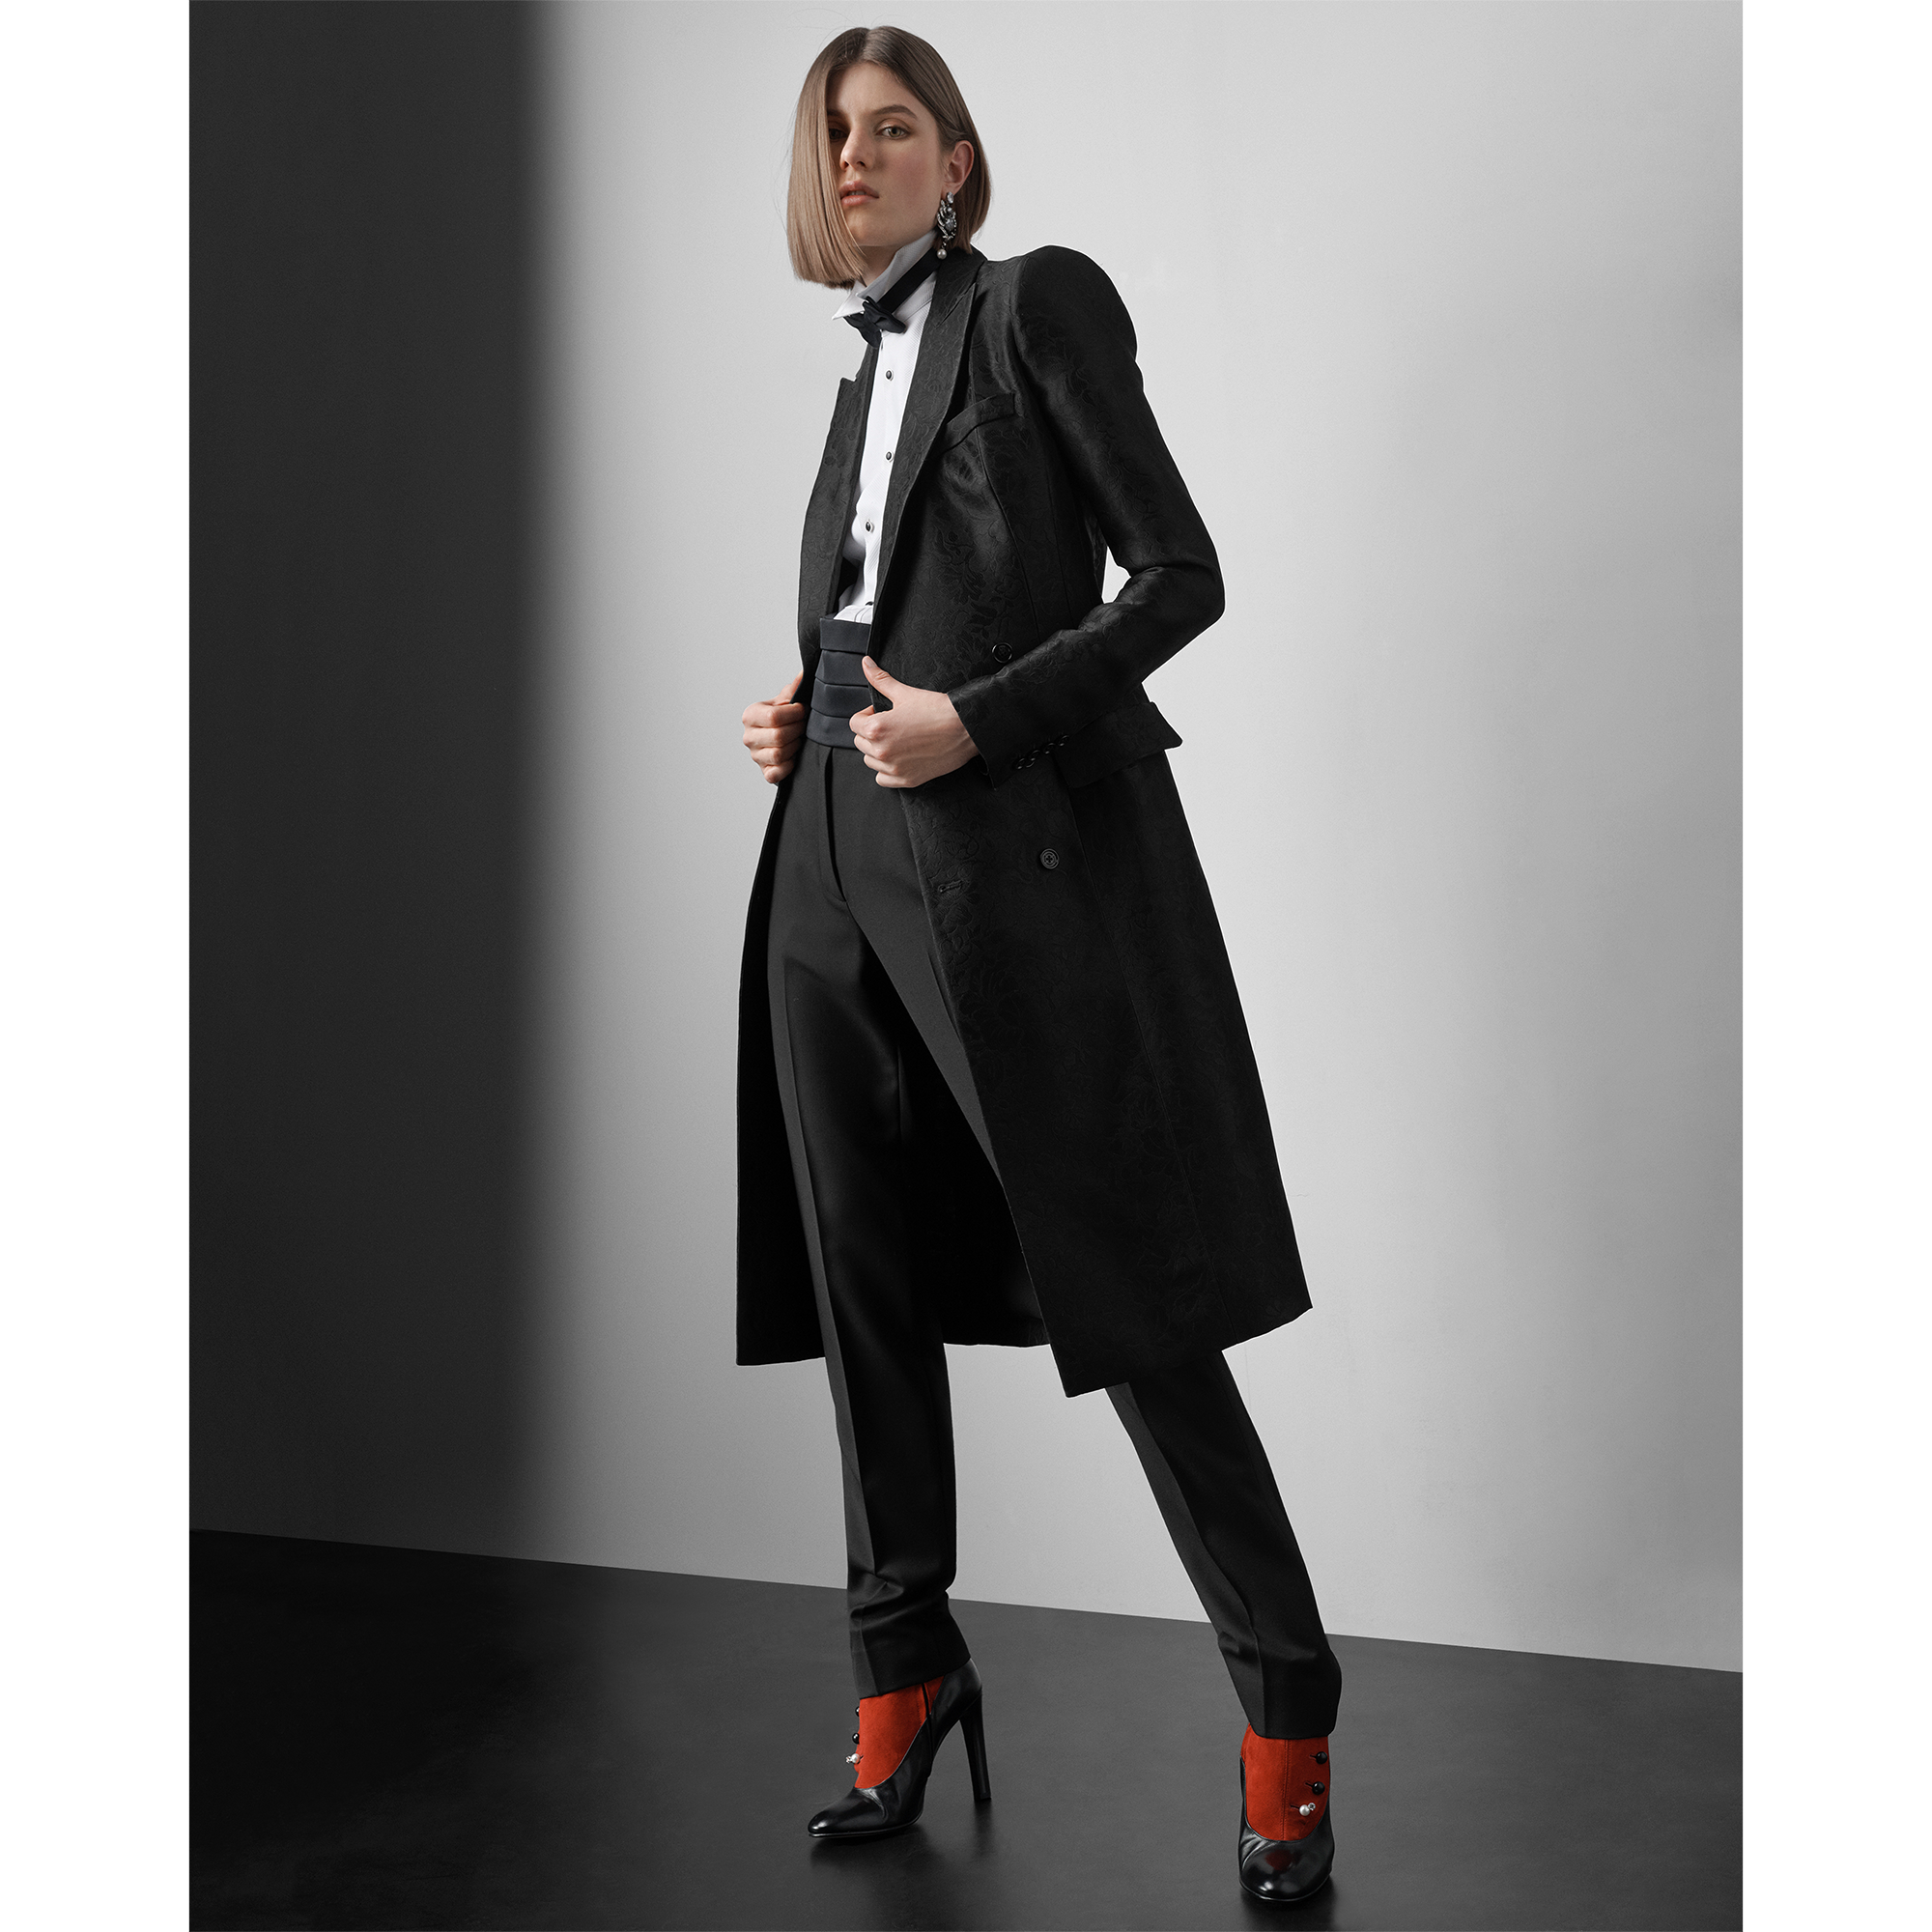 Ralph Lauren Cyrene Jacquard Coat Dress. 1